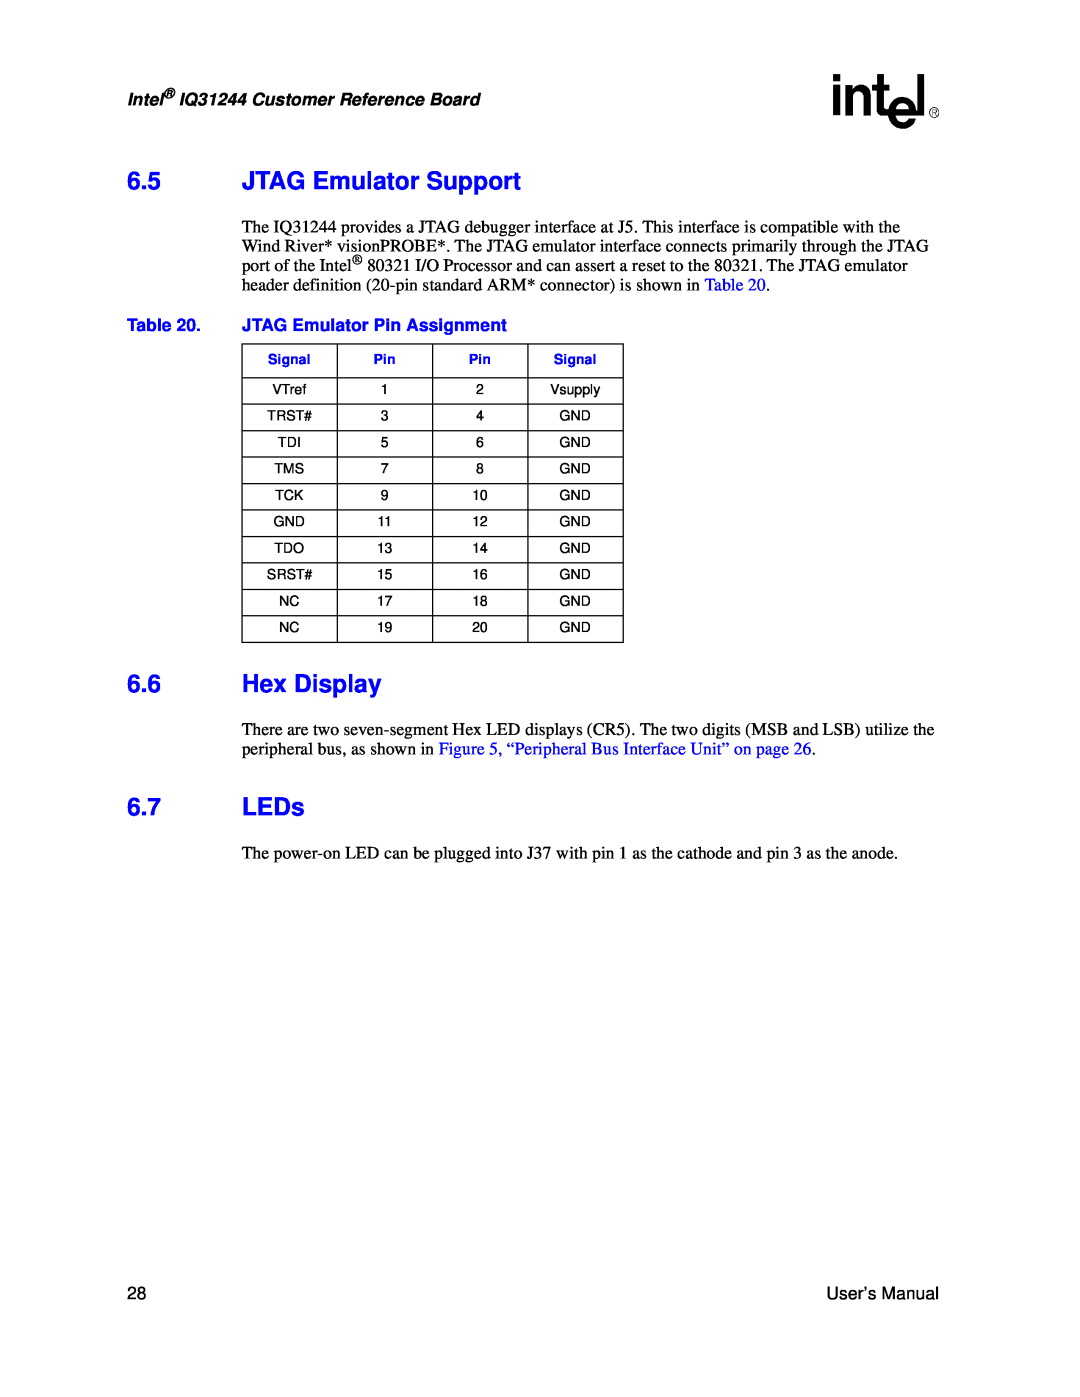 Intel IQ31244 user manual 6.5JTAG Emulator Support, 6.6Hex Display, 6.7LEDs, JTAG Emulator Pin Assignment 